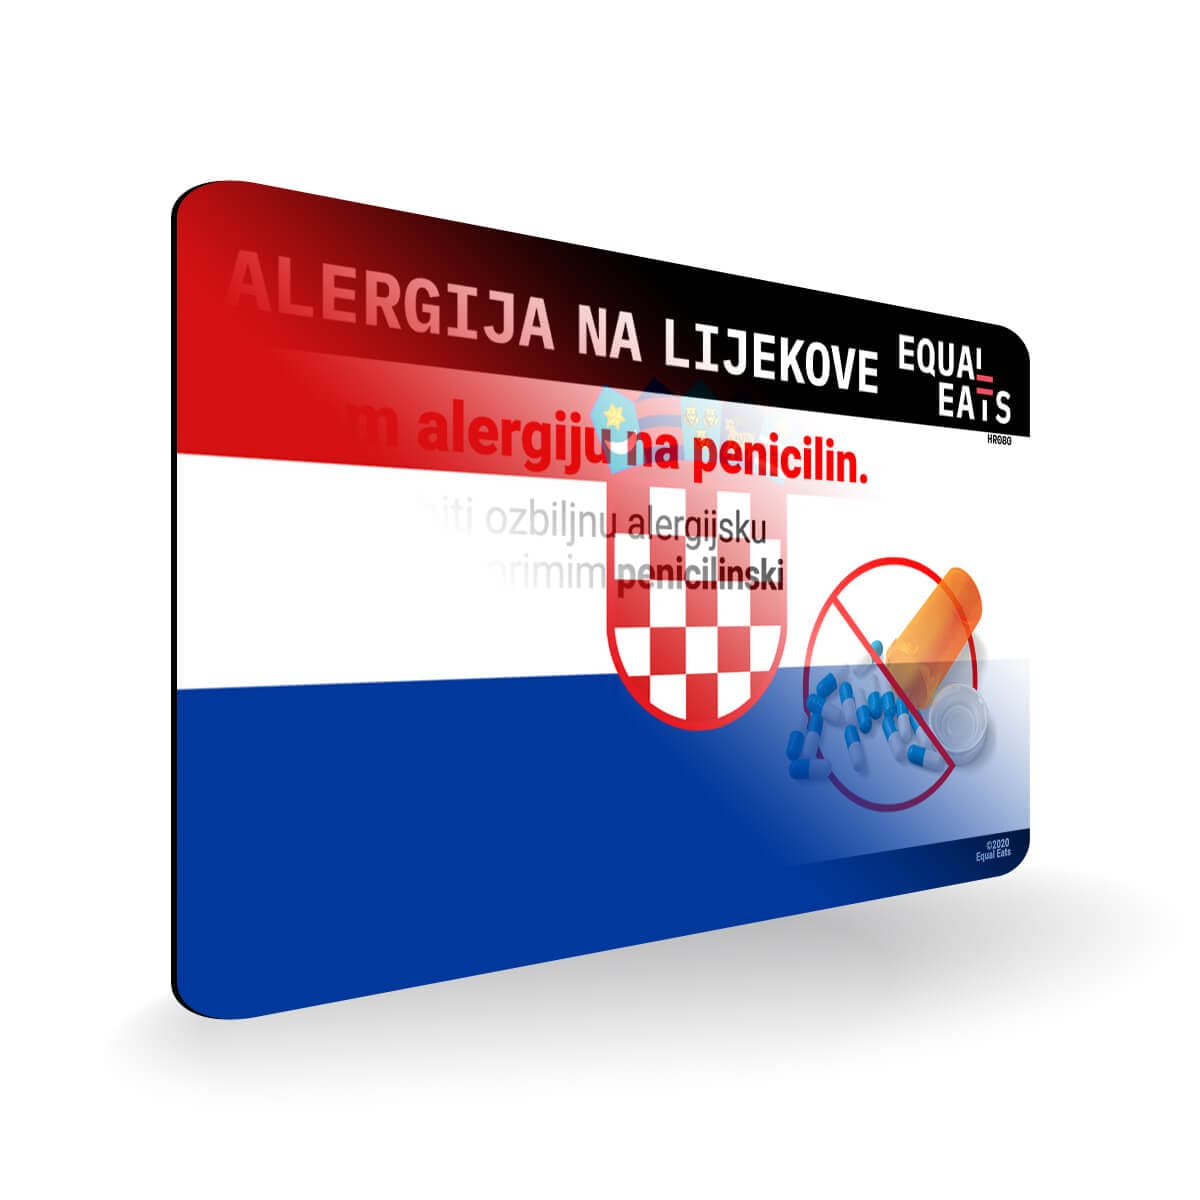 Penicillin Allergy in Croatian. Penicillin medical ID Card for Croatia